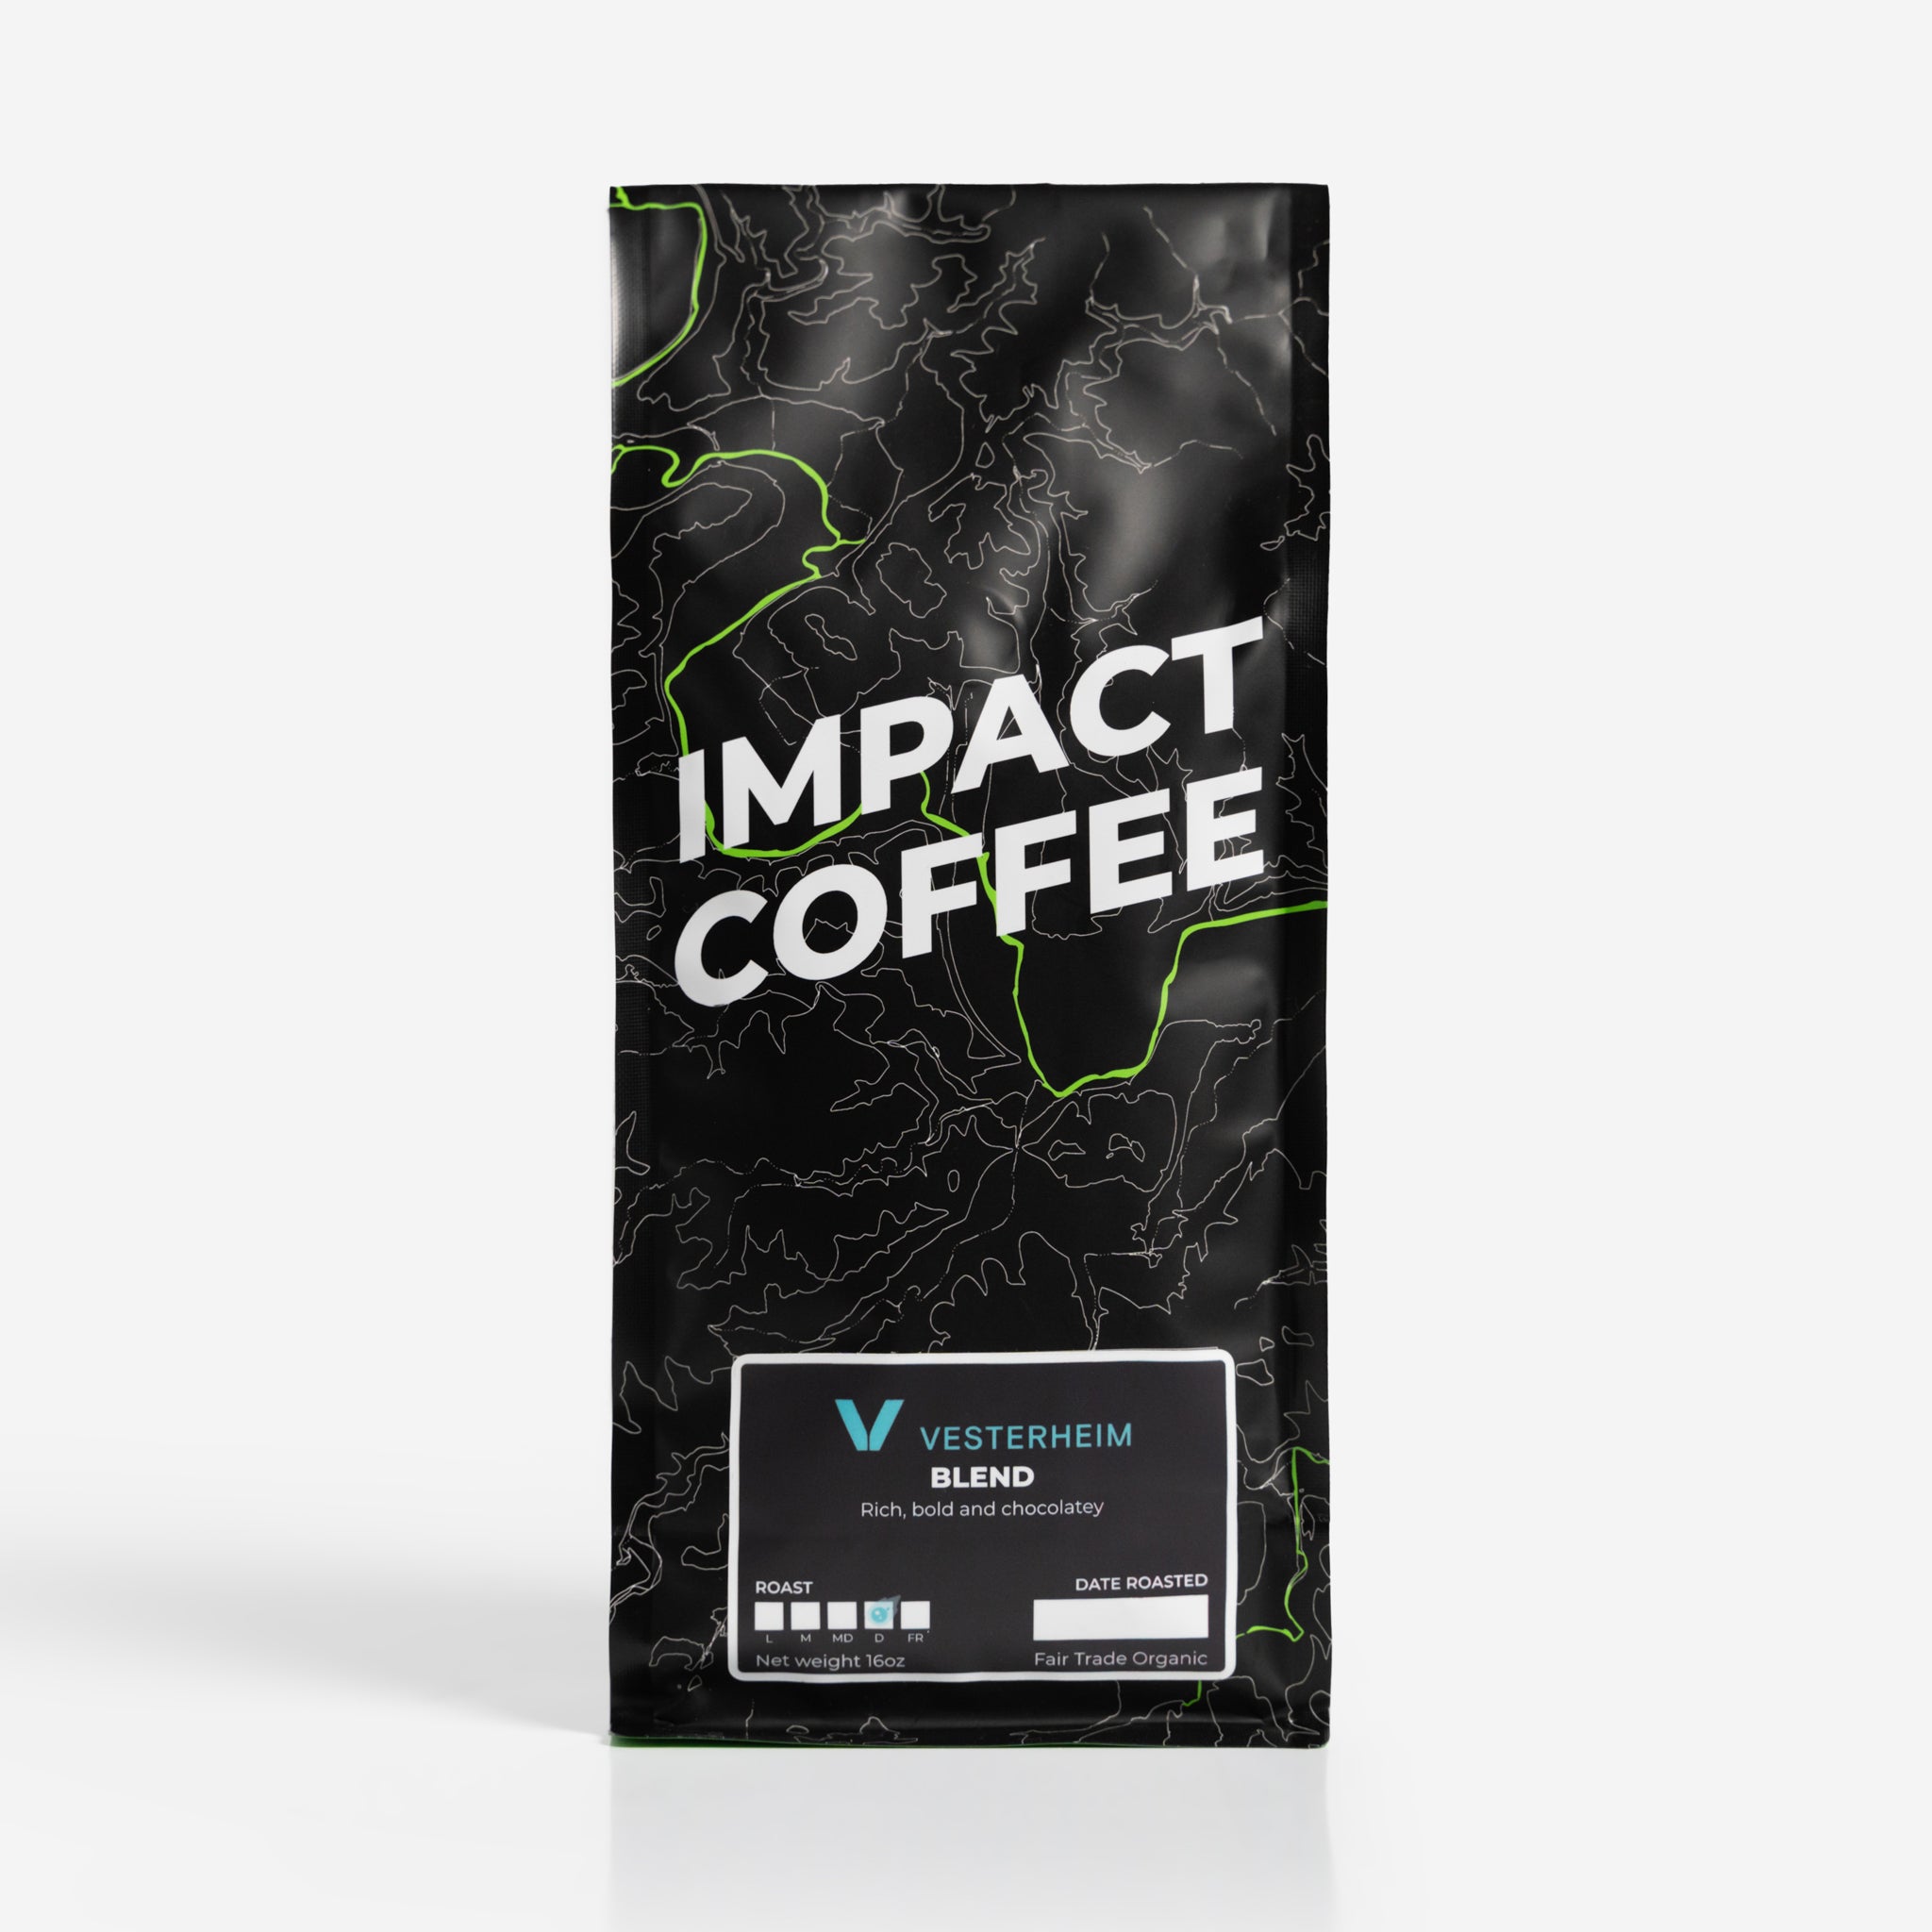 Vesterheim Blend by Impact Coffee